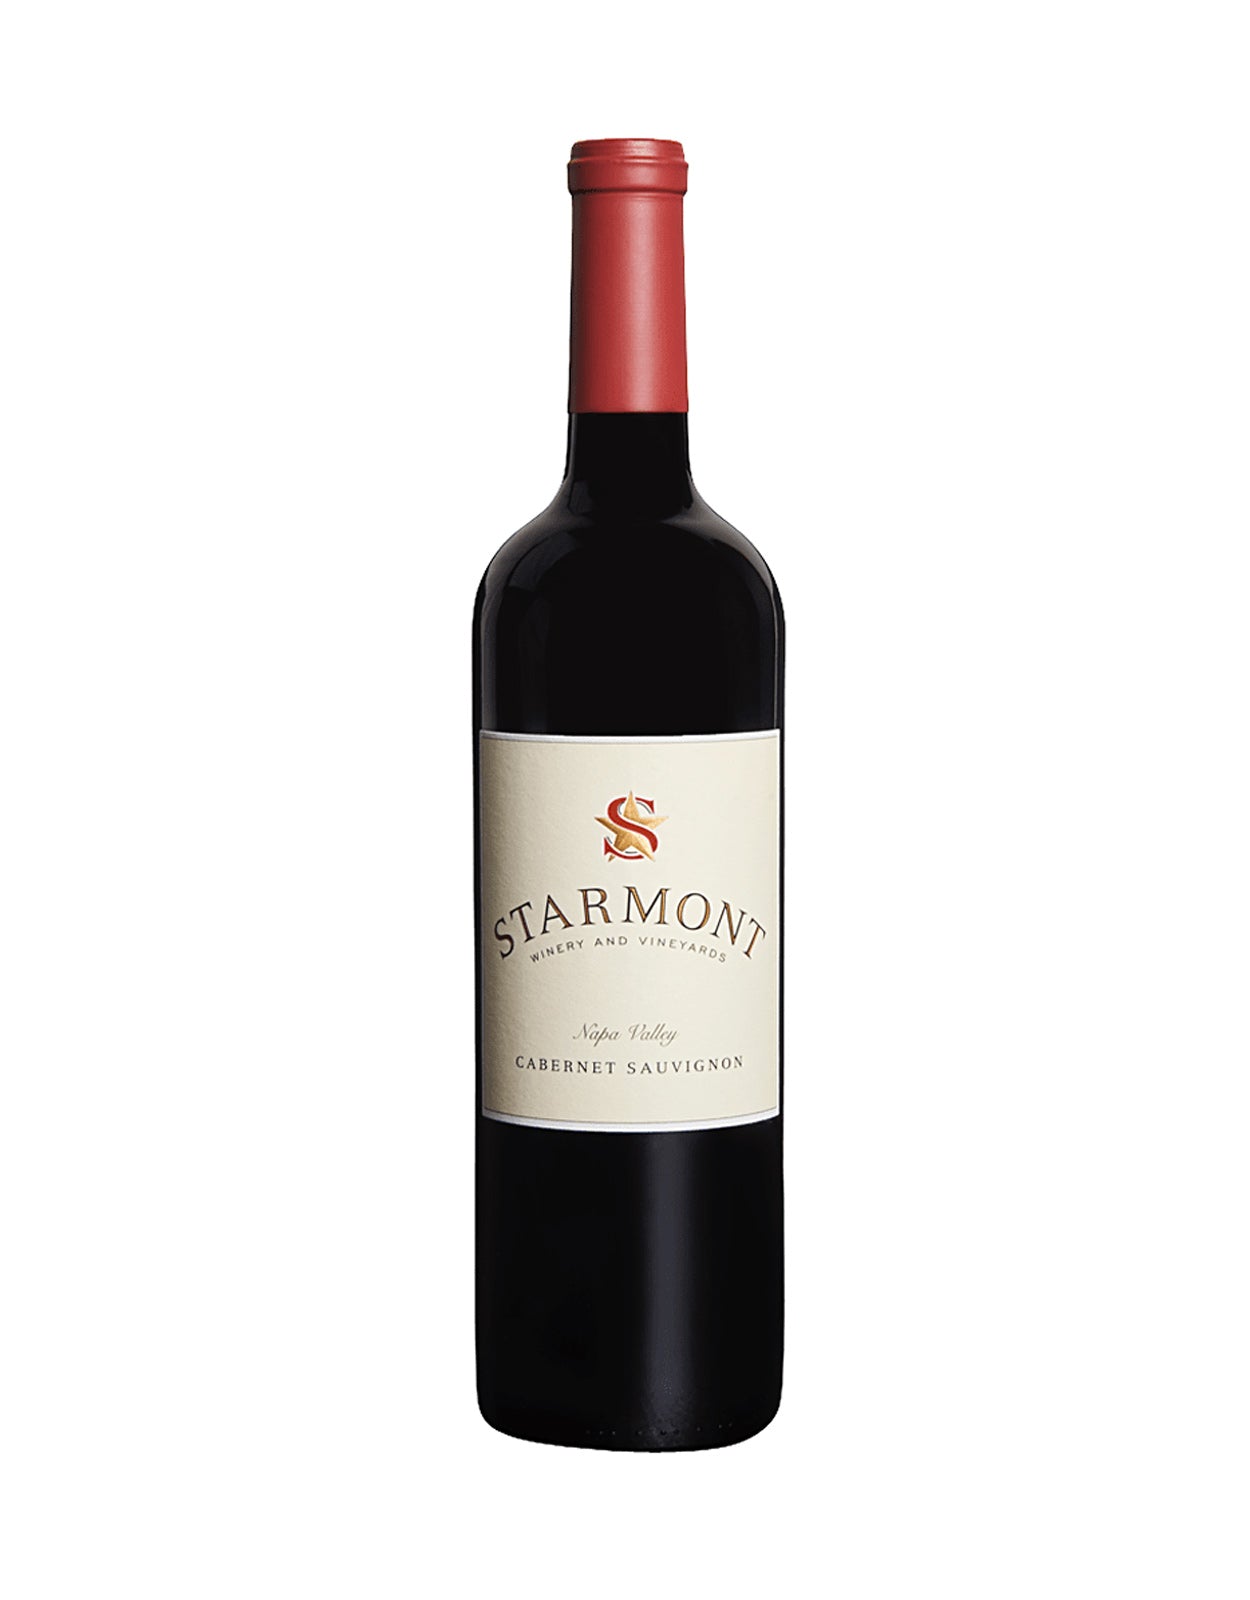 Starmont Cabernet Sauvignon 2018 - 375 ml